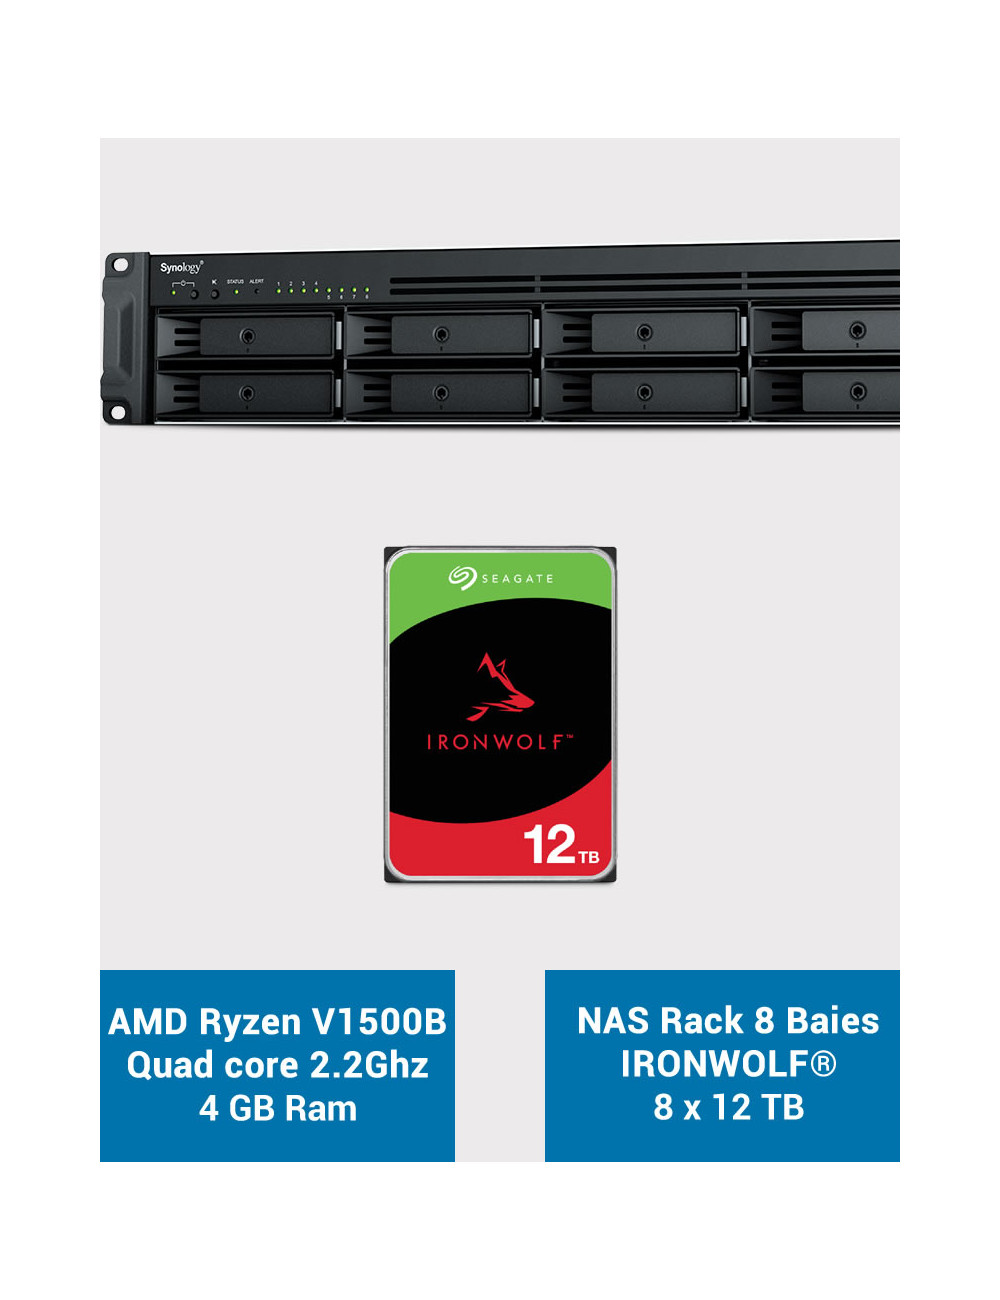 Synology RS1221+ NAS Rack Server IRONWOLF 96TB (8x12TB)